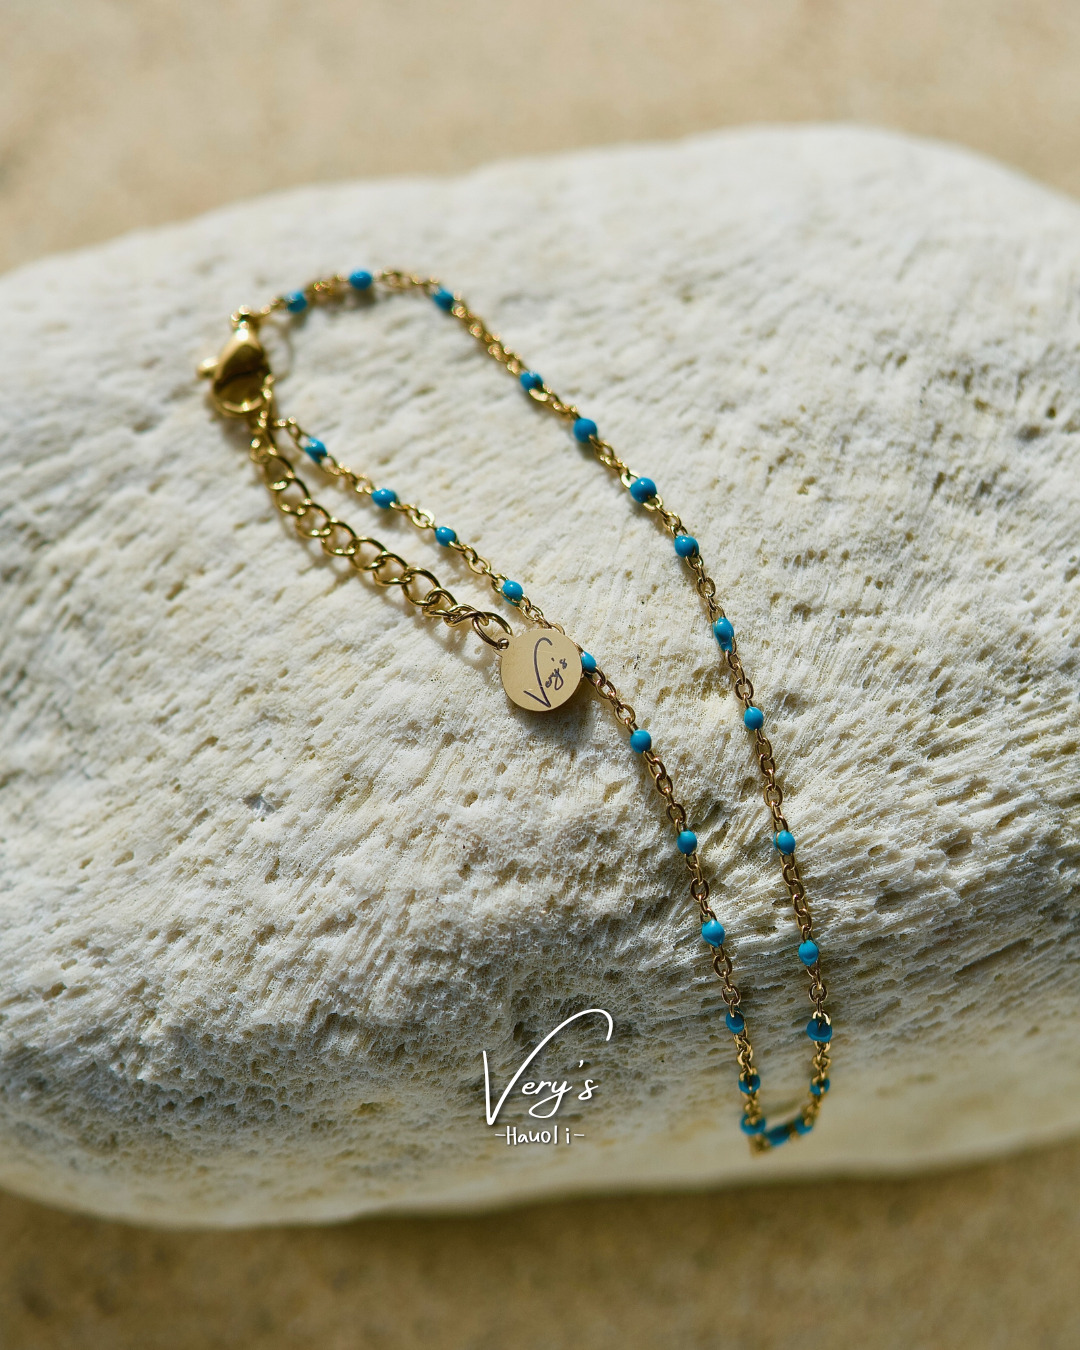 Turquoise Chain Anklet | Very's Hauoli - 公式サイト